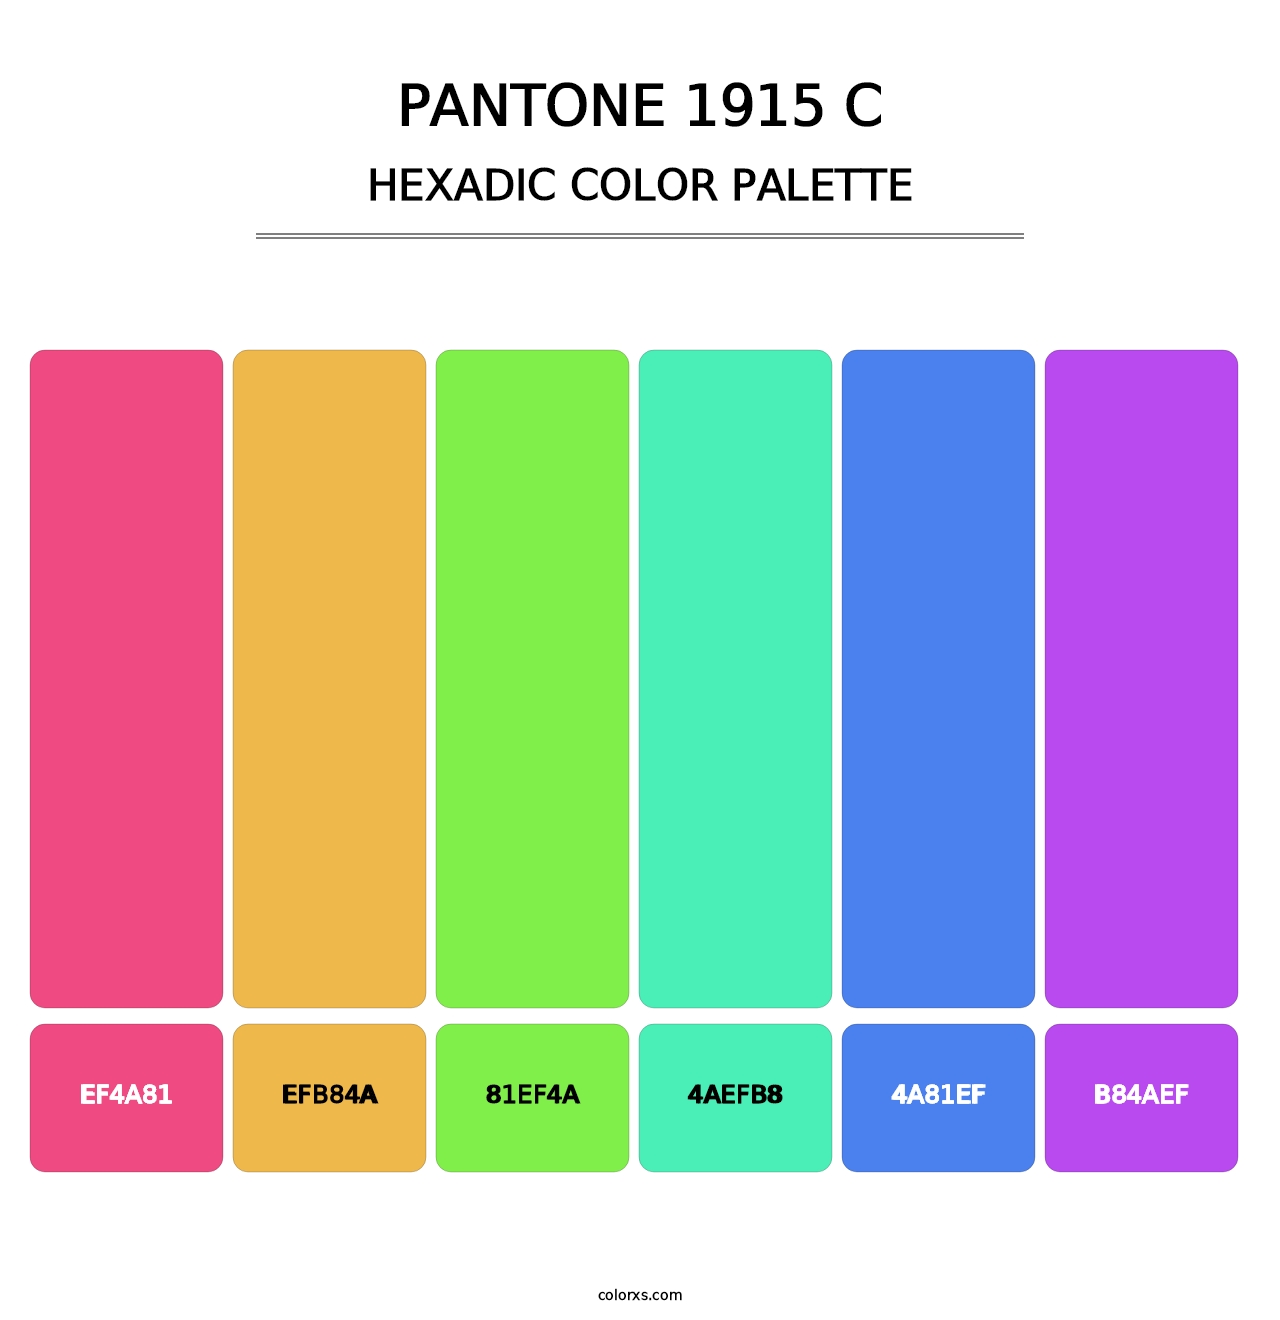 PANTONE 1915 C - Hexadic Color Palette